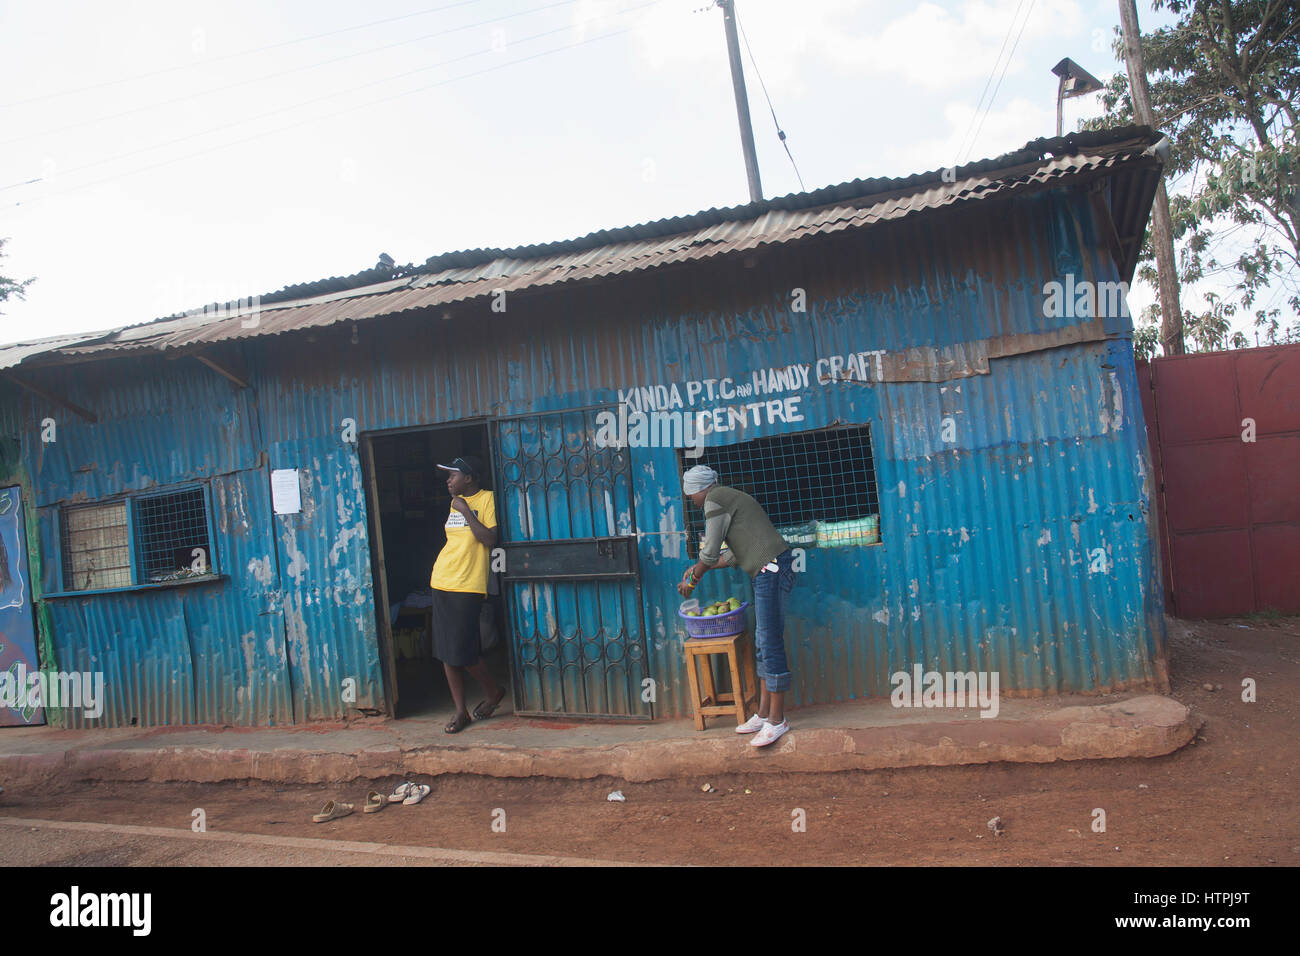 The Kinda PTC Handy Craft Centre, Kibera slums, Nairobi, East Africa Stock Photo